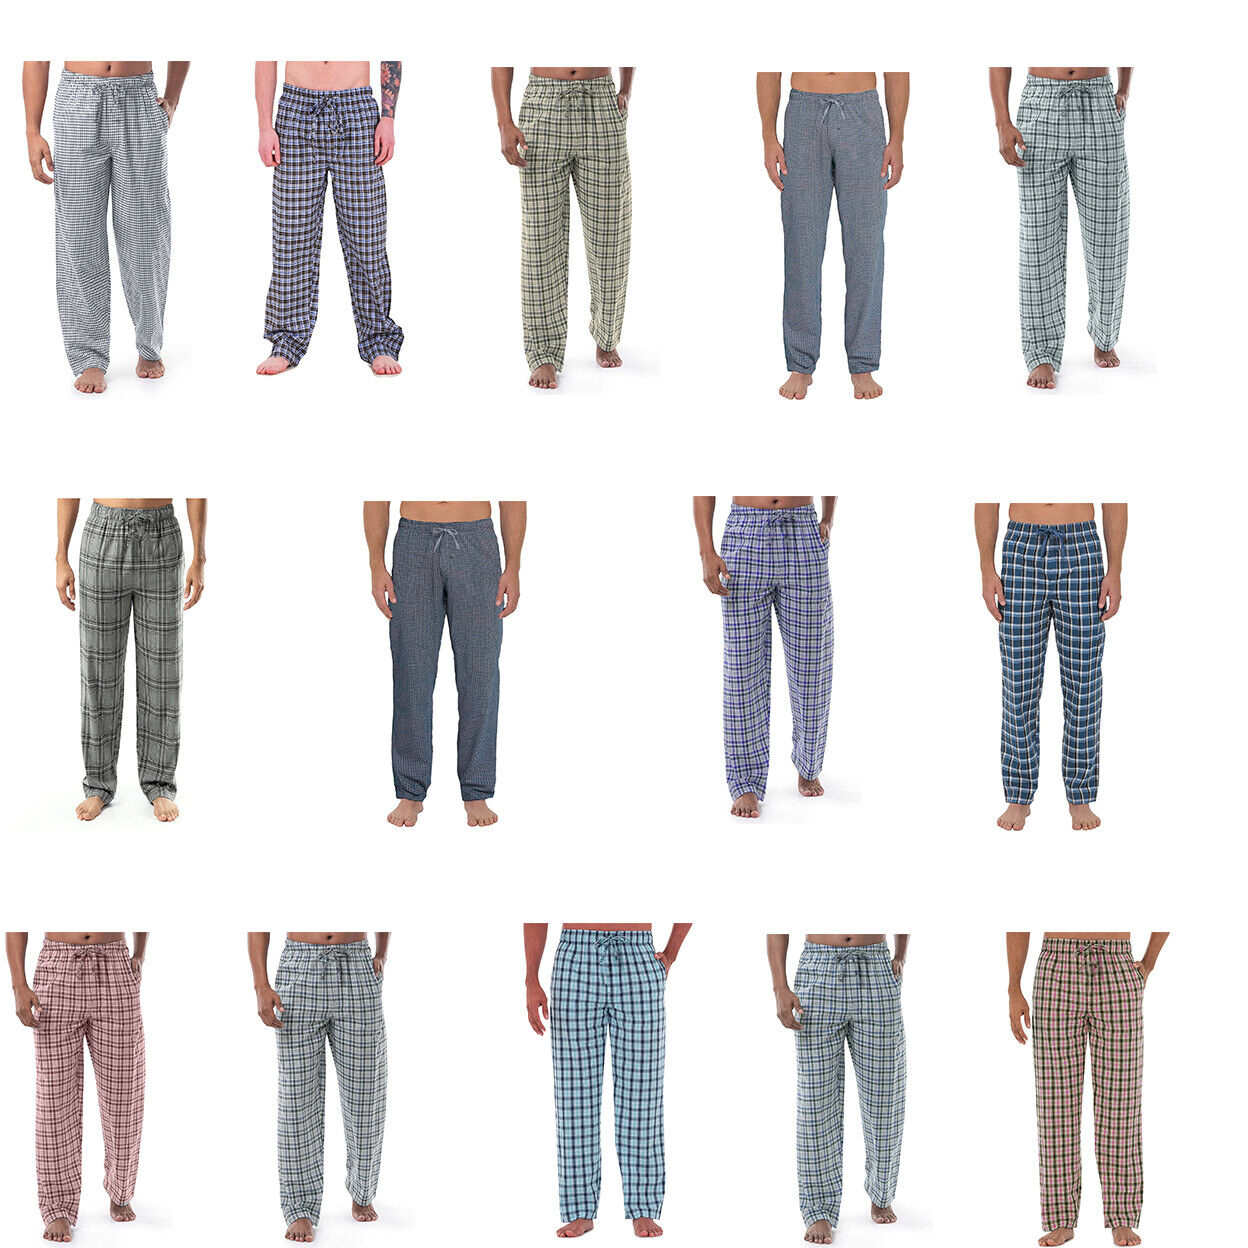 Men's Ultra-Soft Plaid Cotton Jersey Knit Comfy Sleep Lounge Pajama Pants - Grey, Large